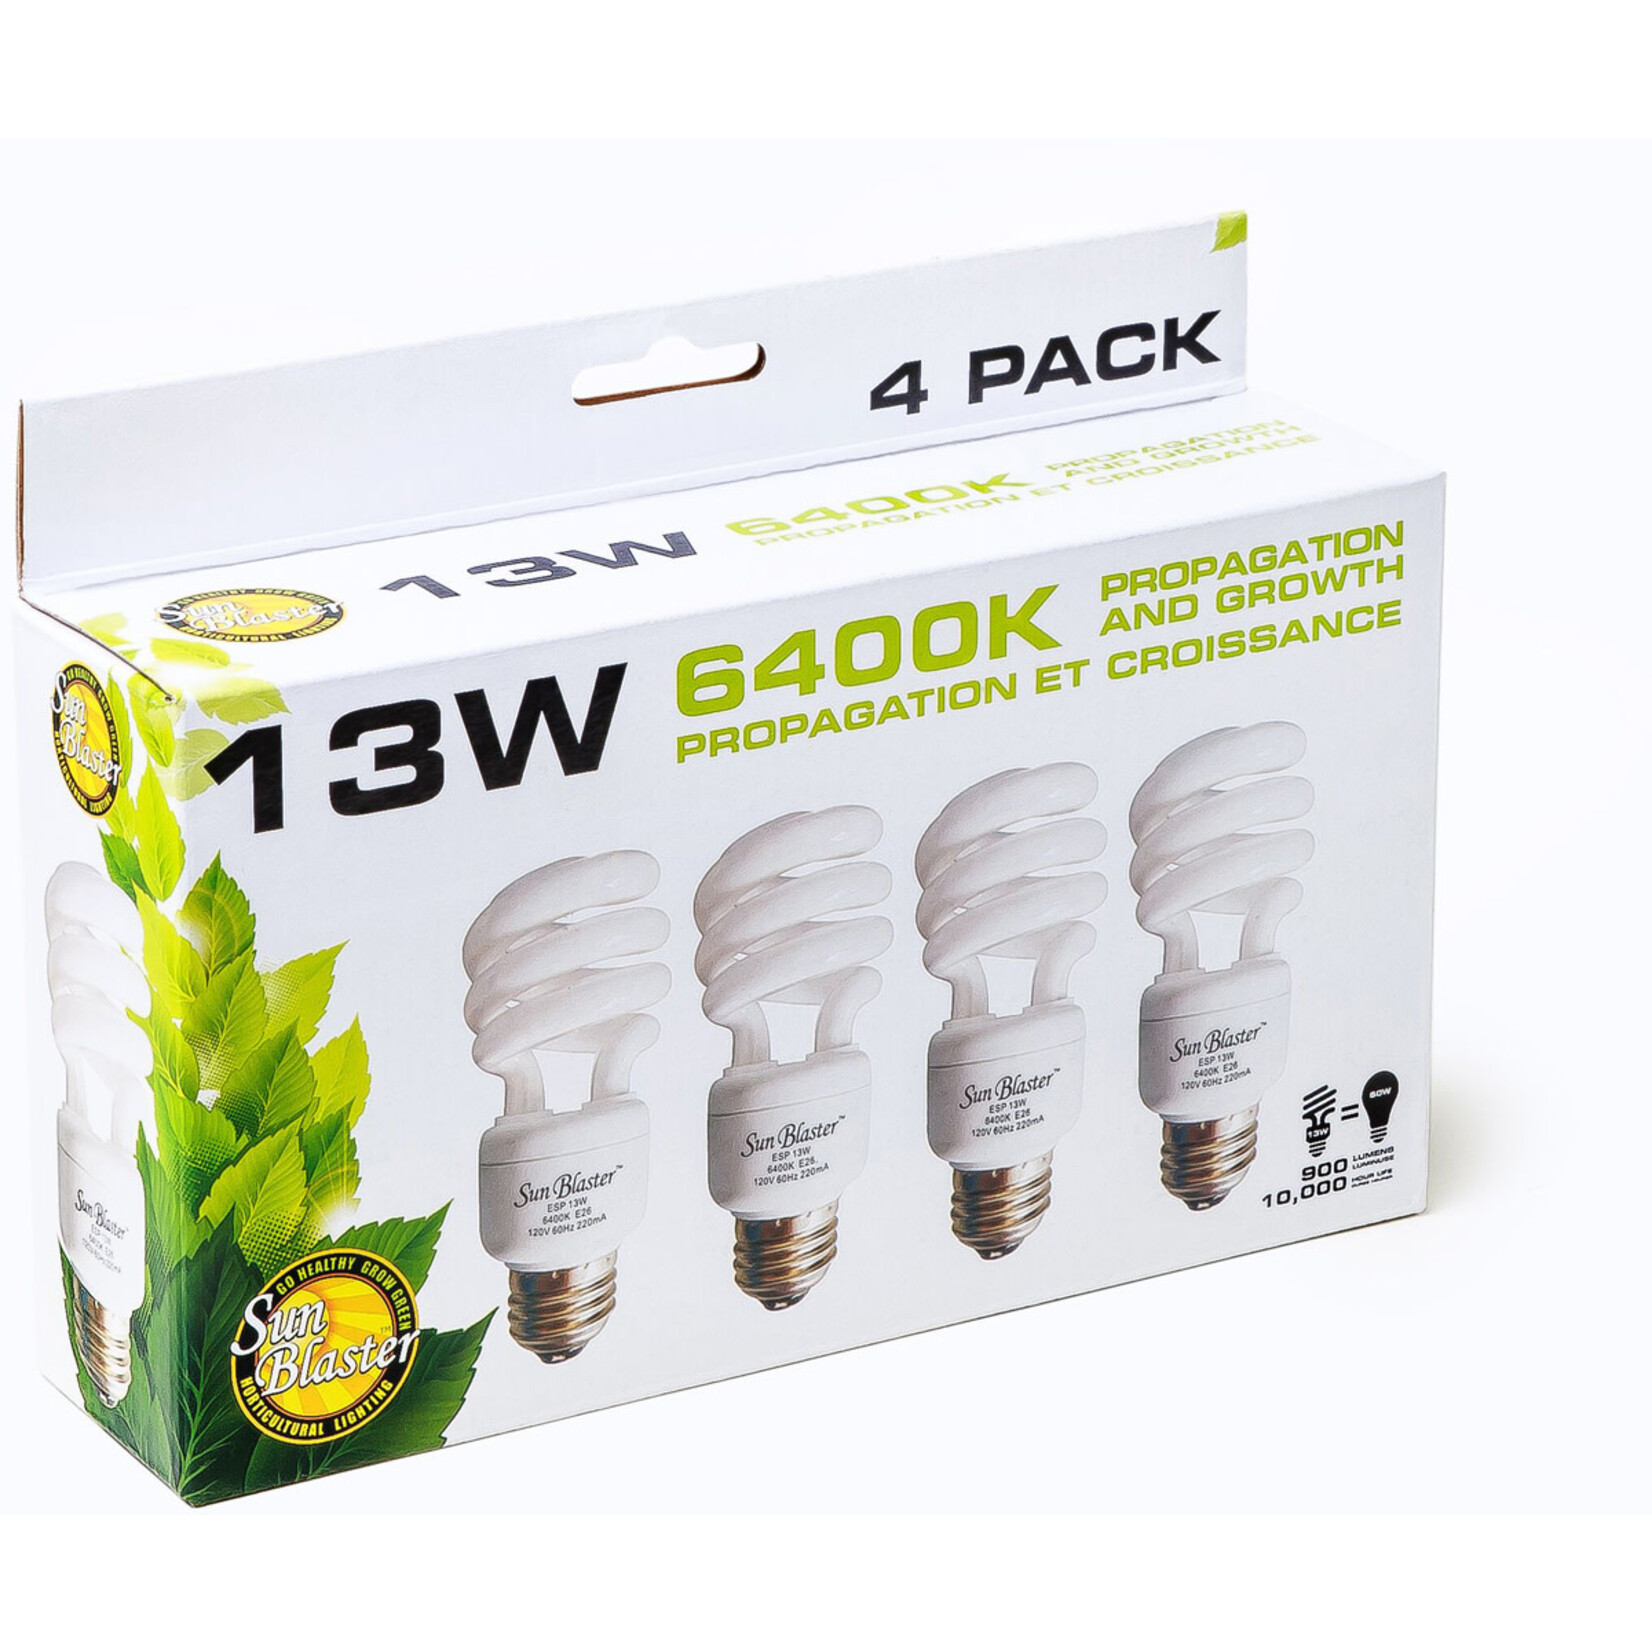 Sunblaster 13W SunBlaster CFL 6400K Grow Light Bulbs - 4 per pack